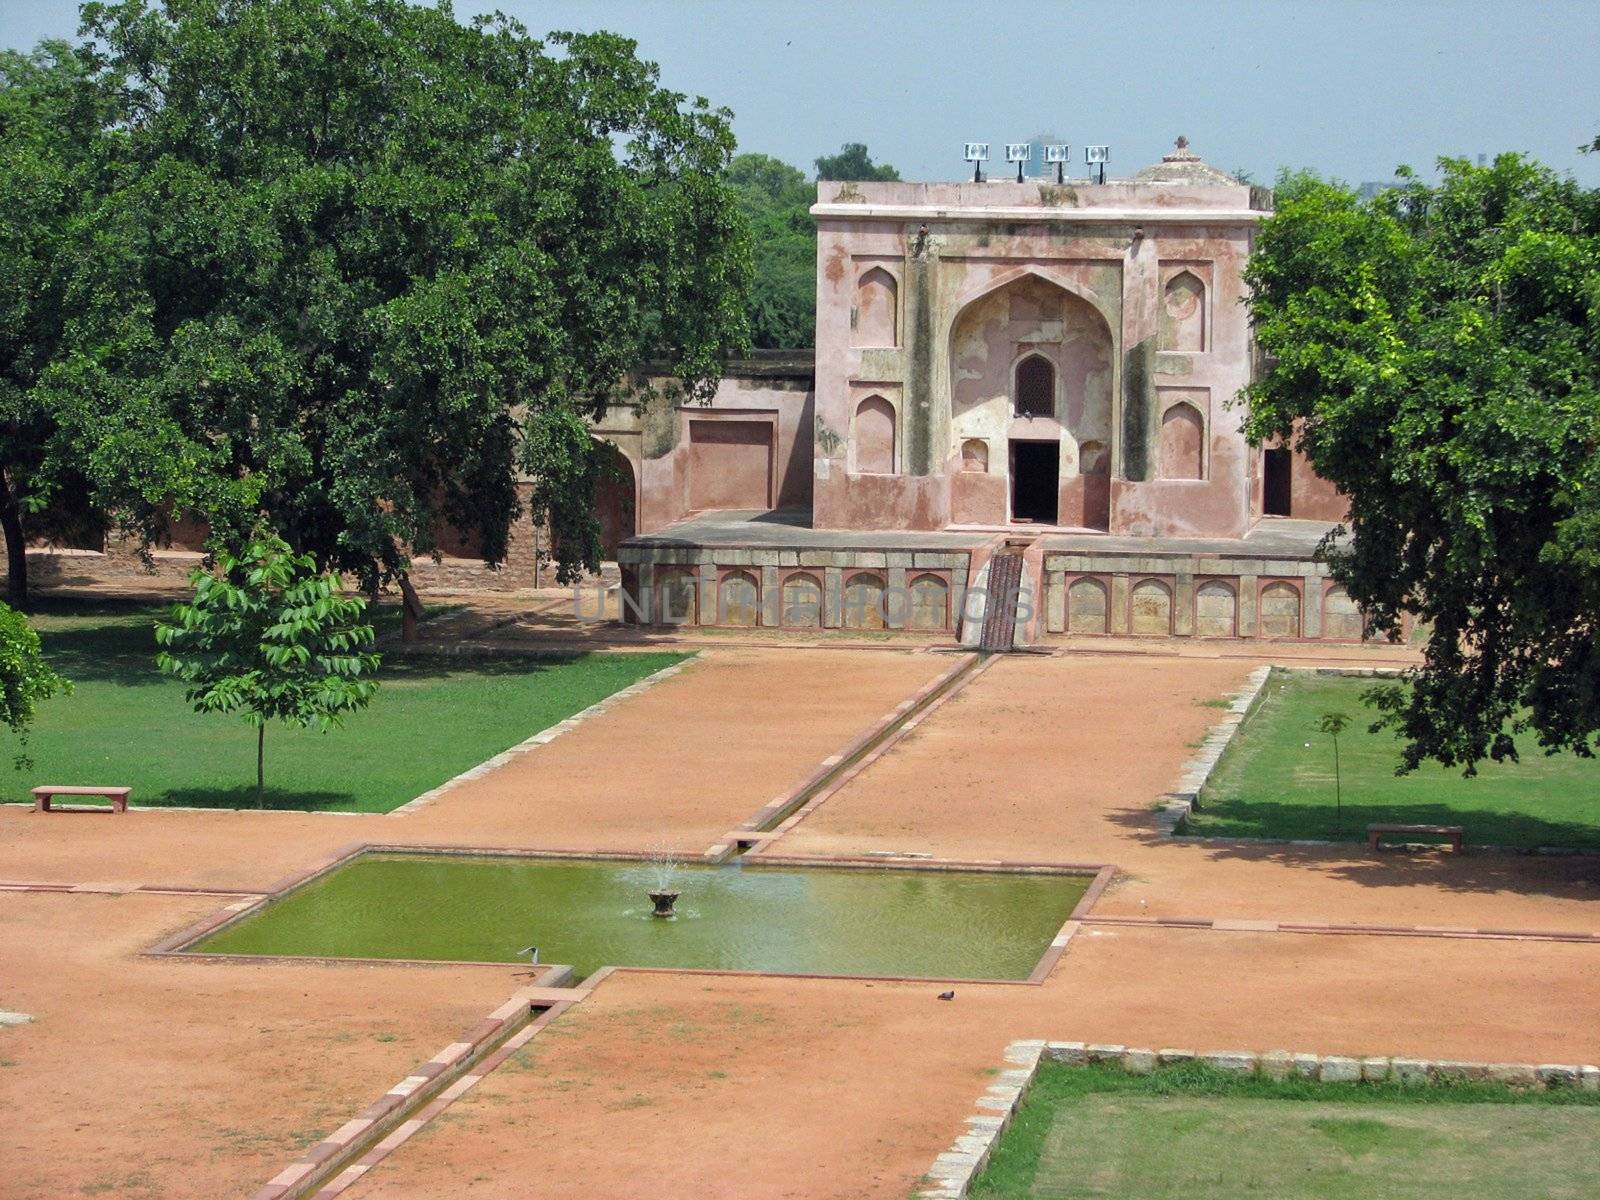 A garden area at Humayun's Tomb in New Delhi, Inida